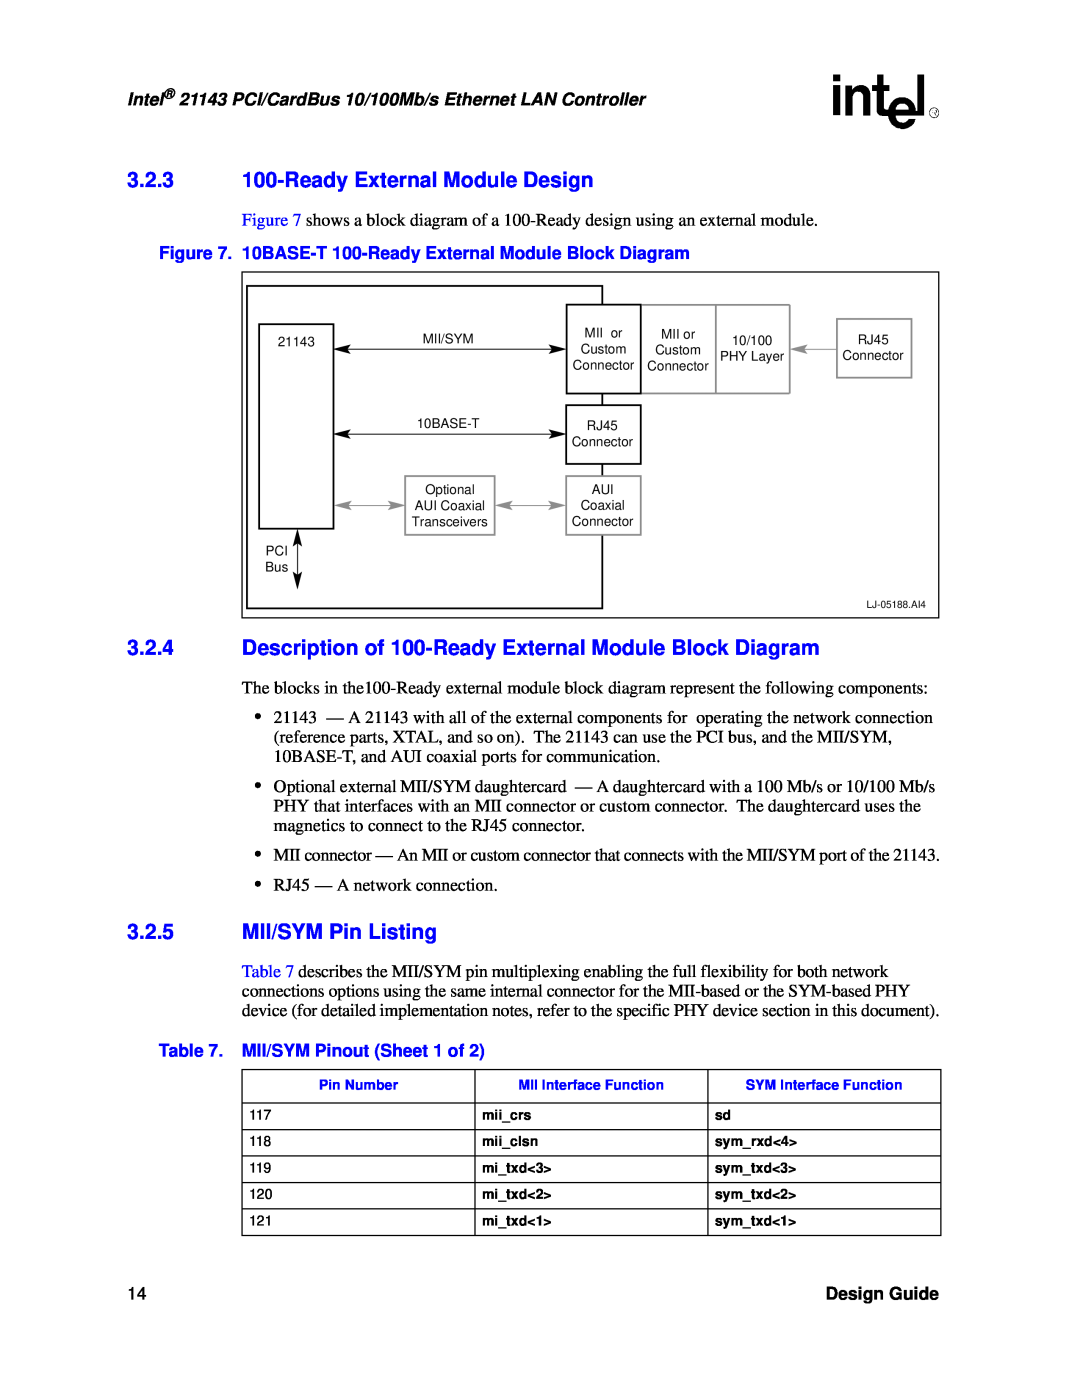 Intel 21143 3.2.3 100-Ready External Module Design, Description of 100-Ready External Module Block Diagram, Design Guide 